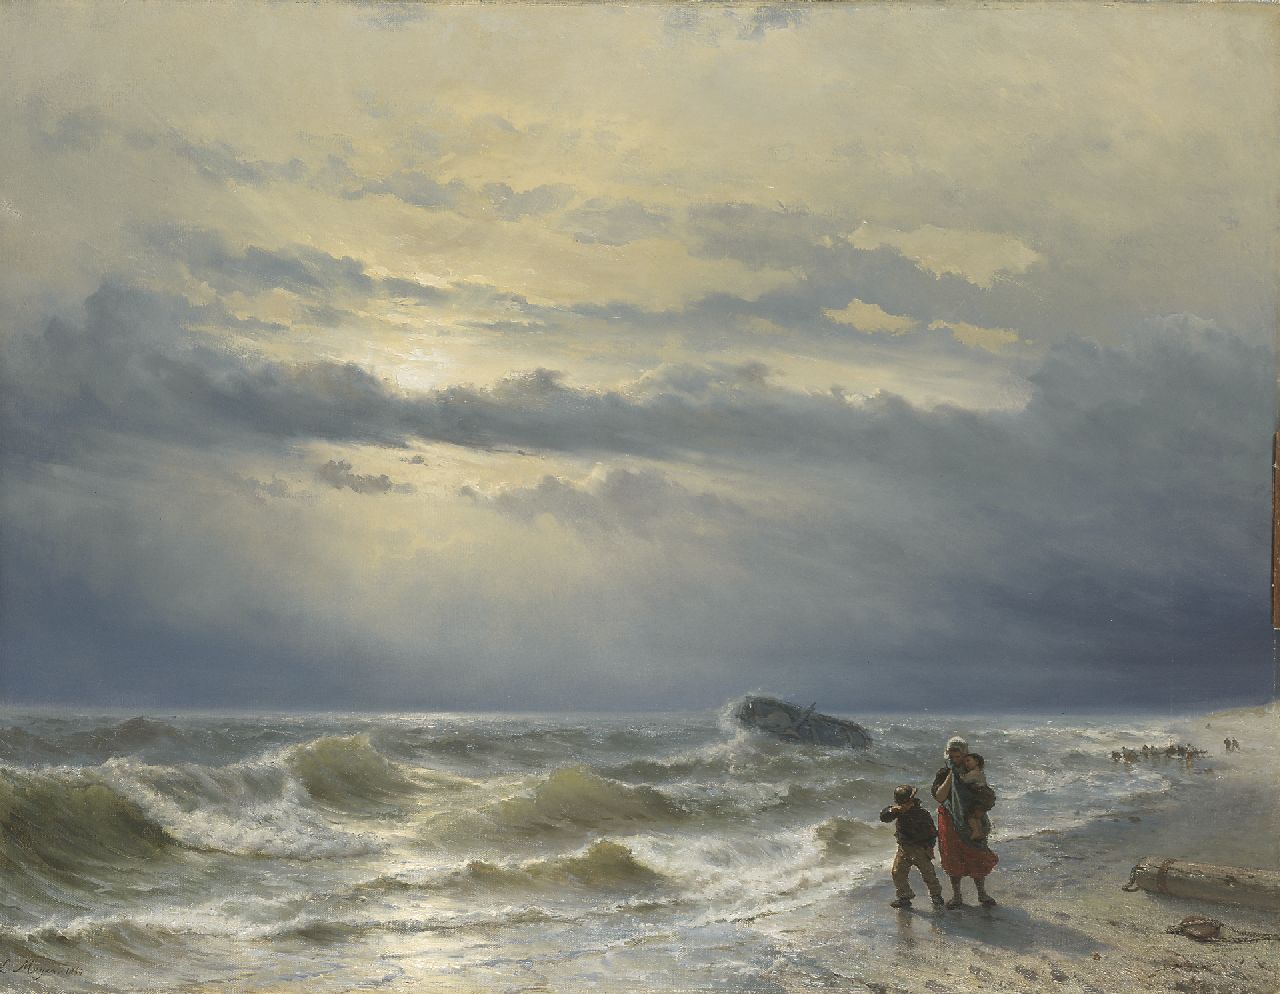 Meijer J.H.L.  | Johan Hendrik 'Louis' Meijer, Na de schipbreuk, olieverf op doek 88,8 x 115,4 cm, gesigneerd linksonder en gedateerd 1864